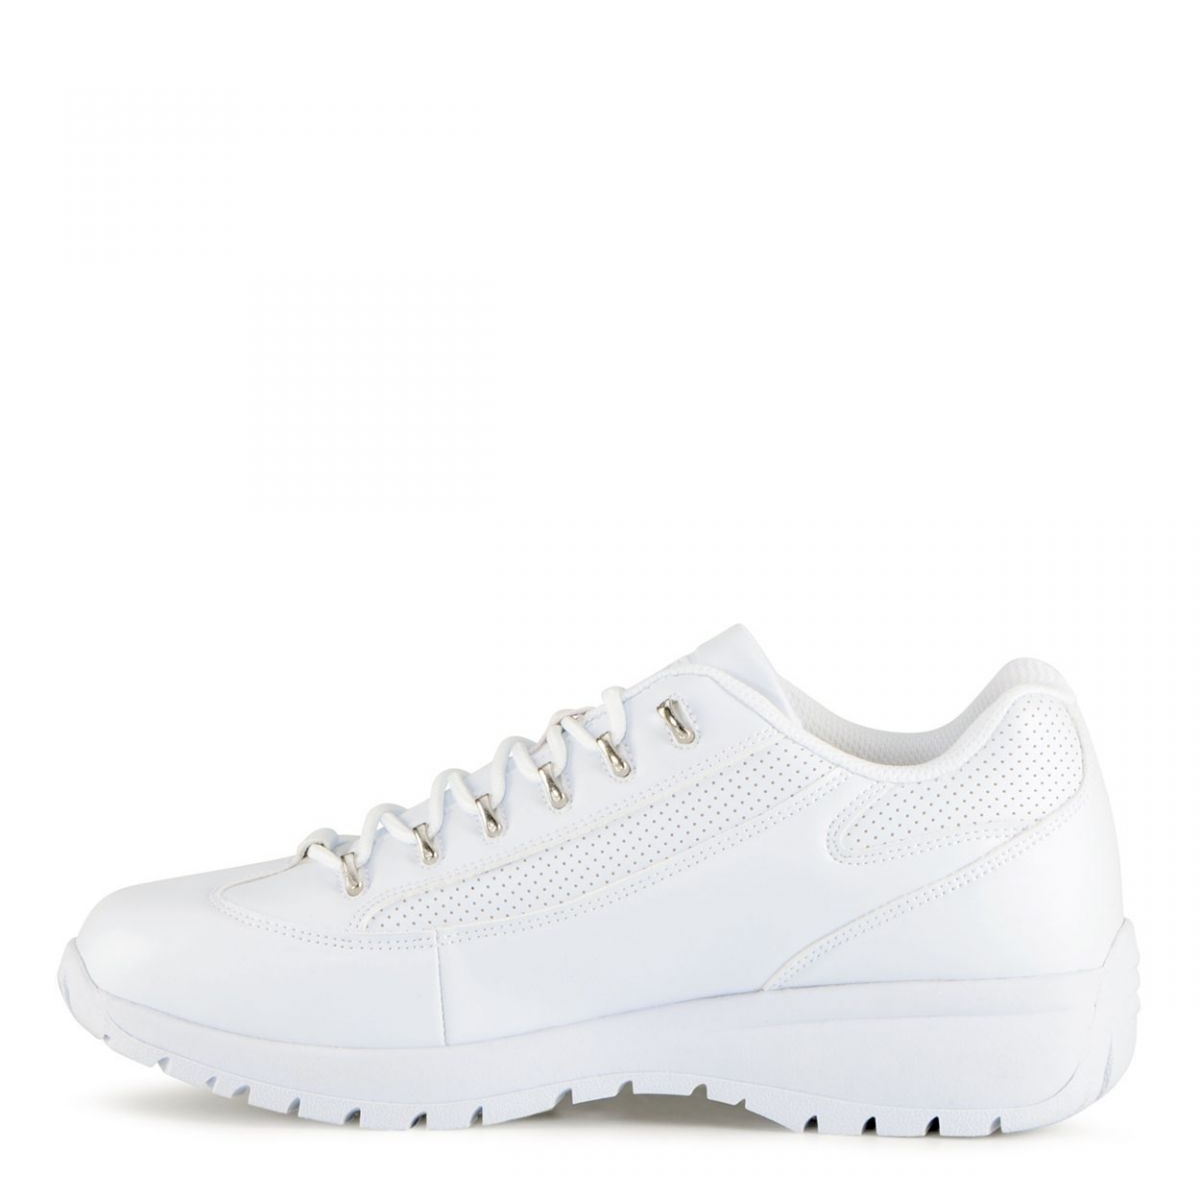 Lugz Men's Express Sneaker White - MEXPRSPV-100 WHITE - WHITE, 13